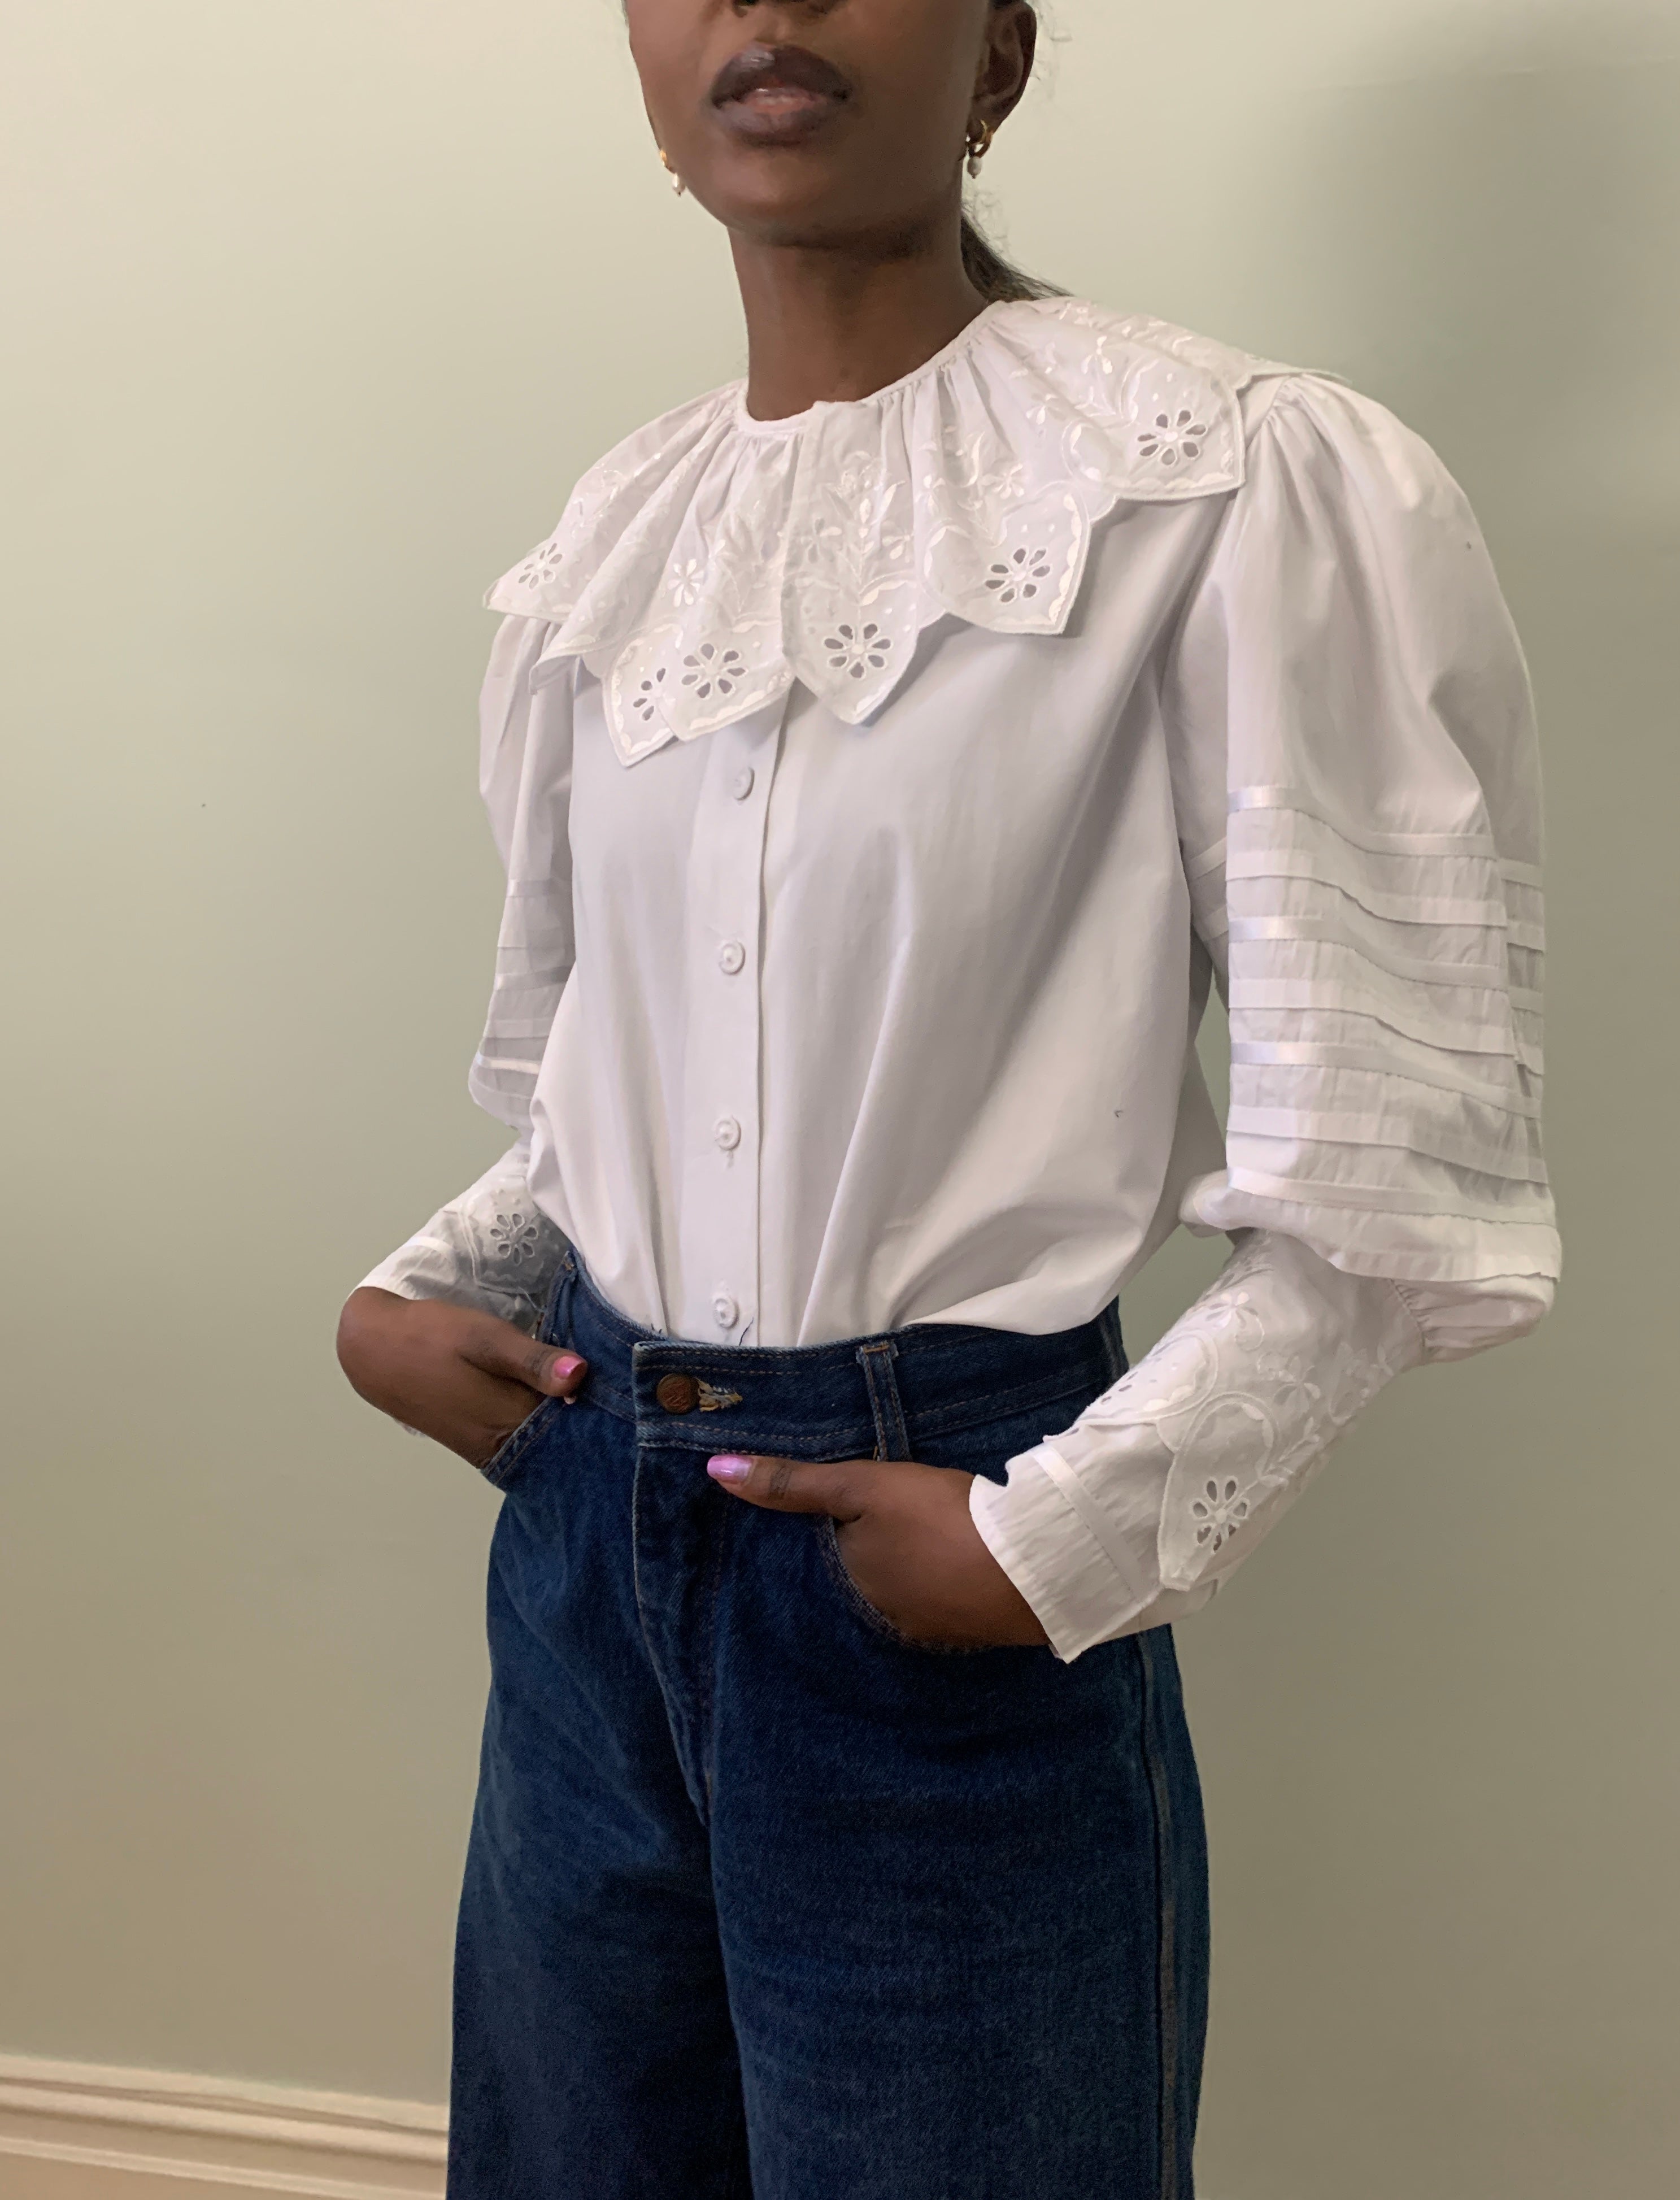 Vintage WOW statement collar blouse